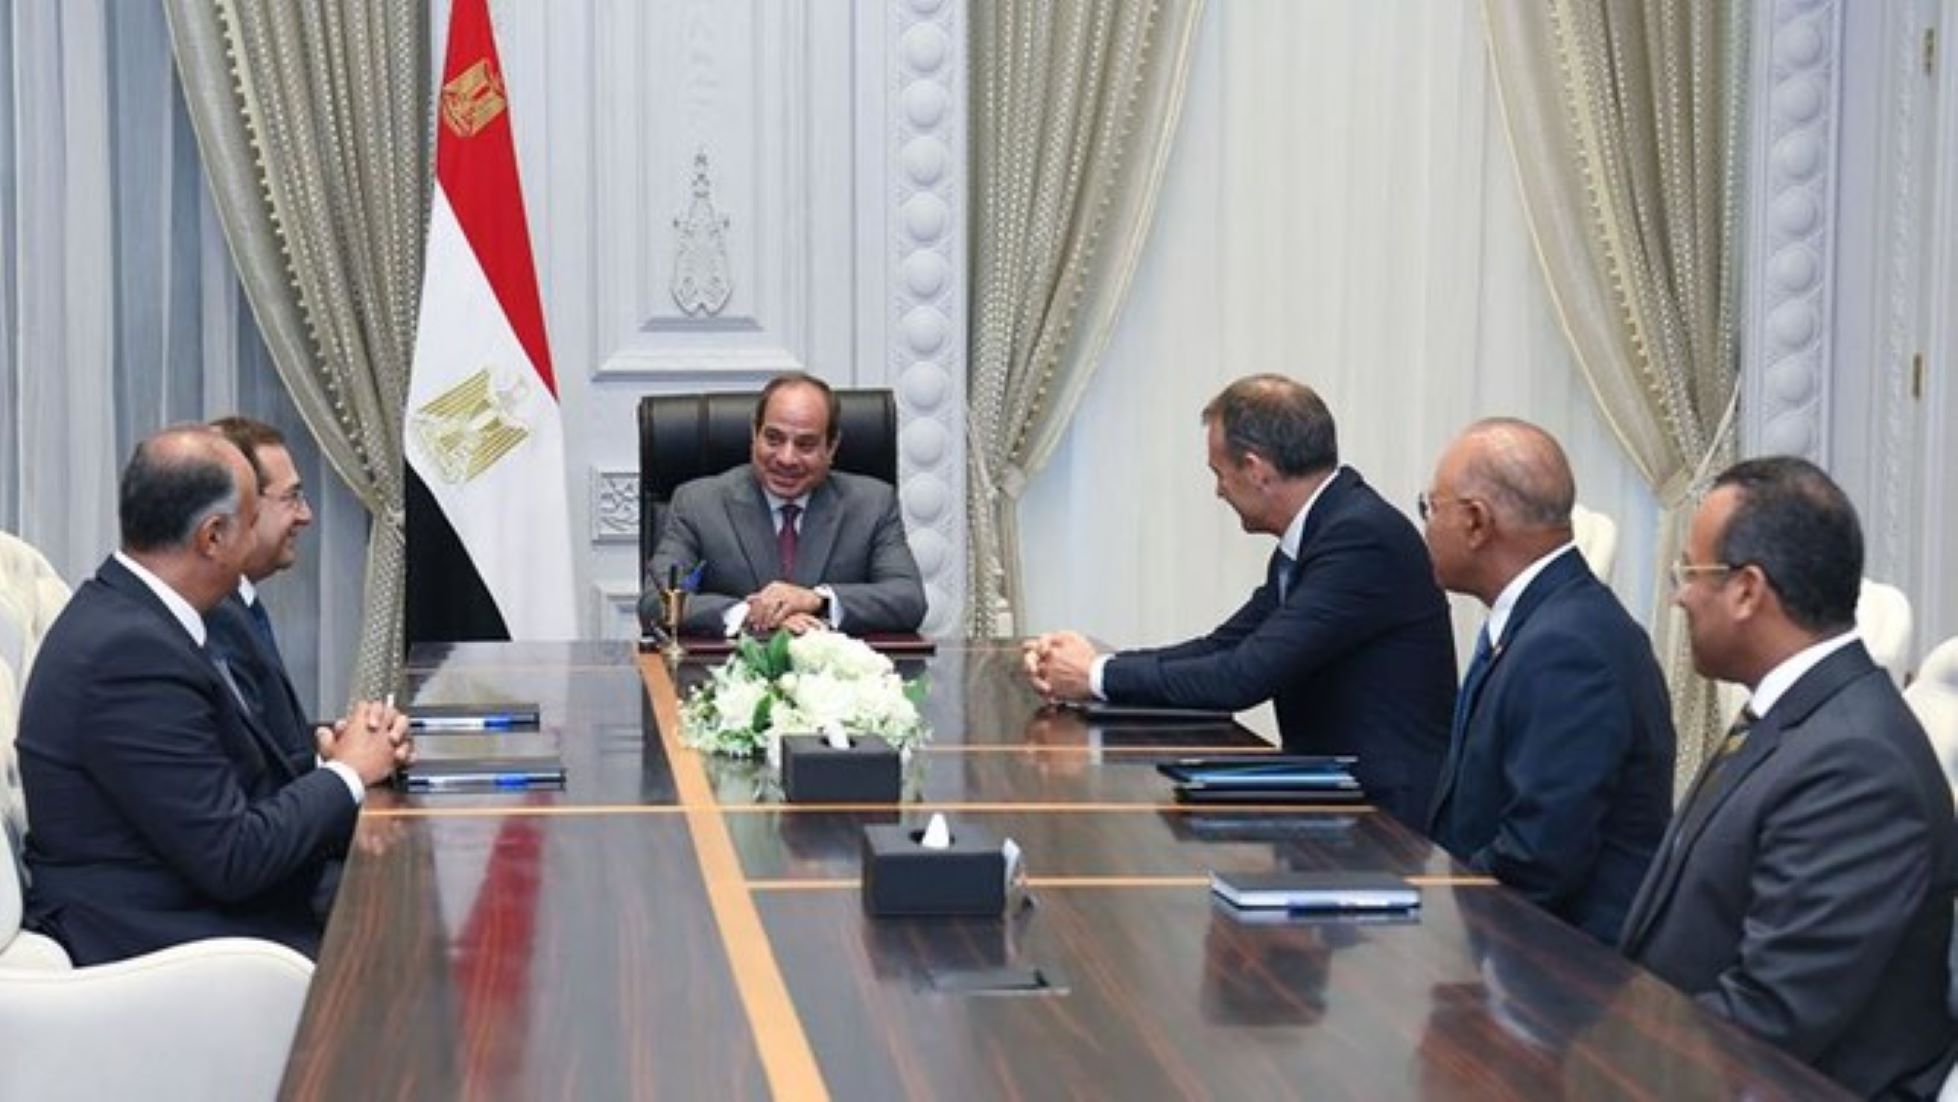 British Petroleum To Invest 1.5 Billion USD In Egypt For Development, Exploration Activities